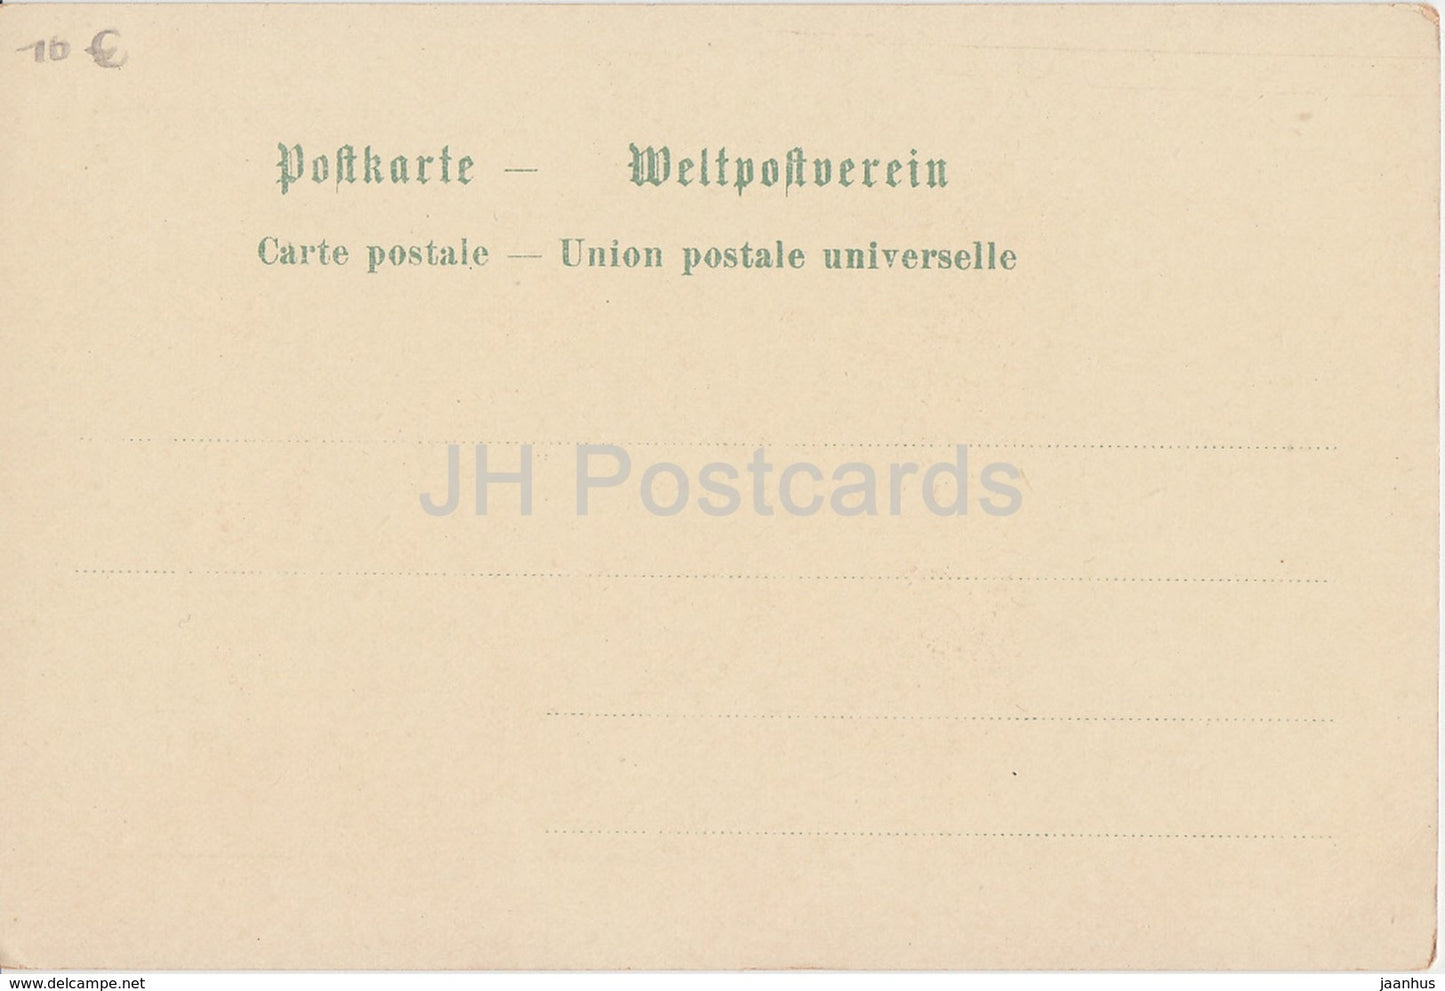 Ungarn - armoiries - carte postale ancienne - Hongrie - inutilisée